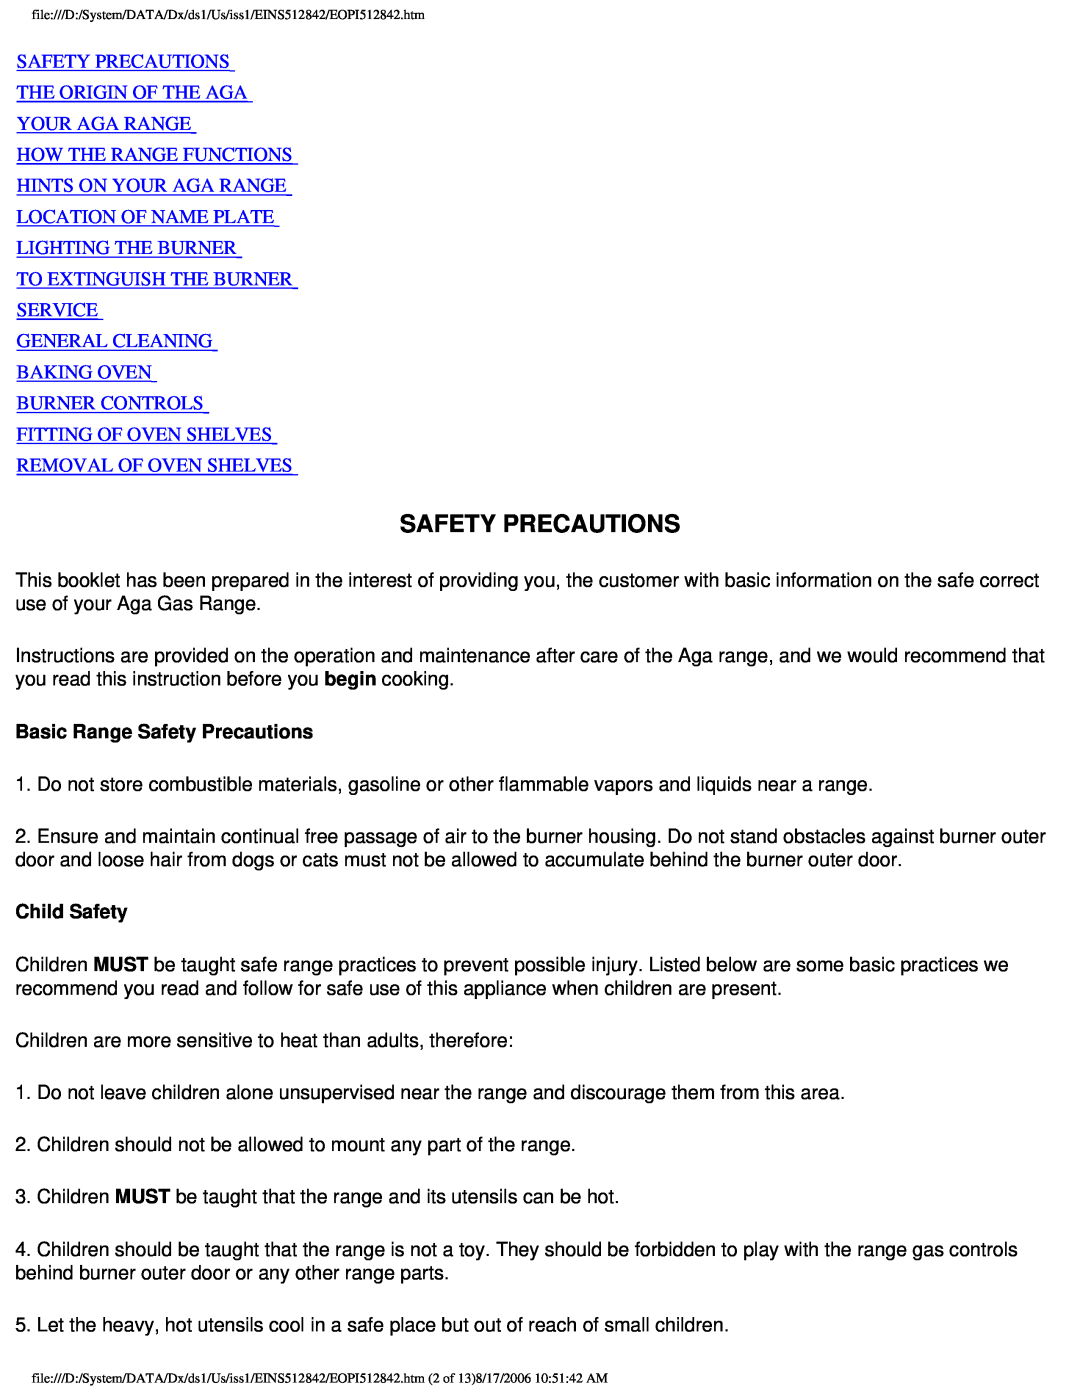 Aga Ranges GC3 Safety Precautions The Origin Of The Aga Your Aga Range, Basic Range Safety Precautions, Child Safety 